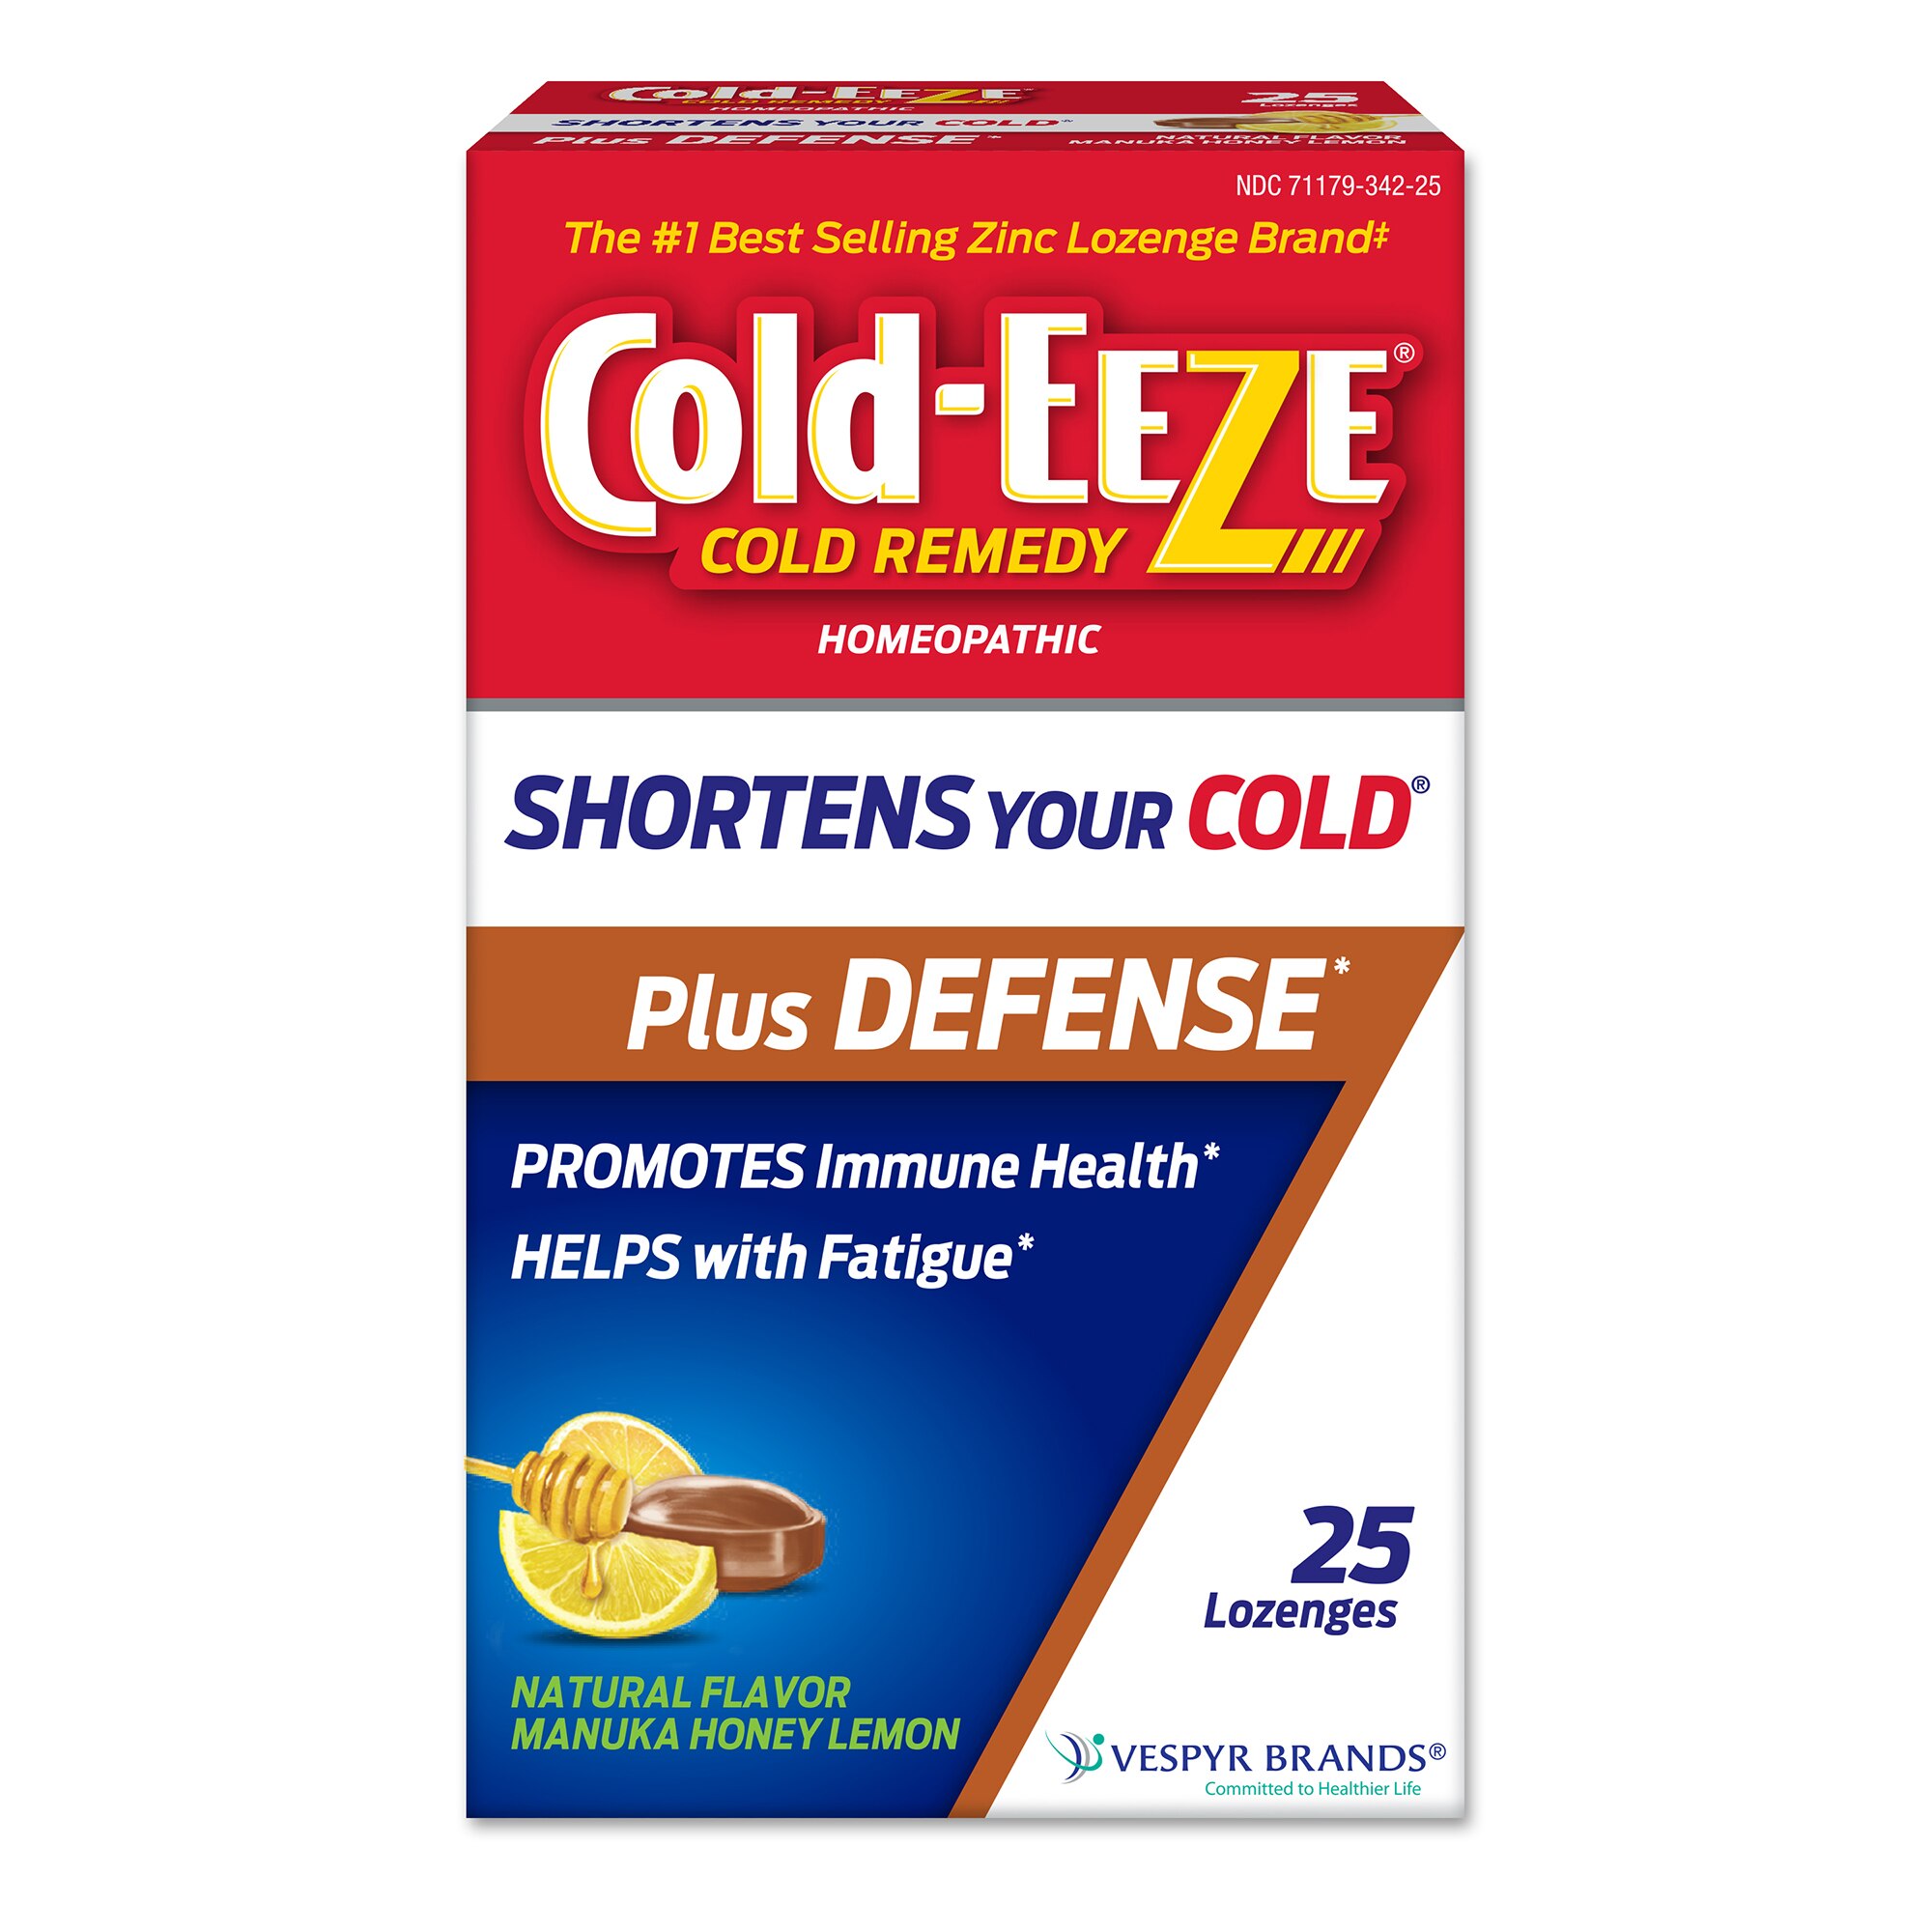 Cold-EEZE Plus Defense Natural Manuka Honey Lemon Lozenges, 25 CT